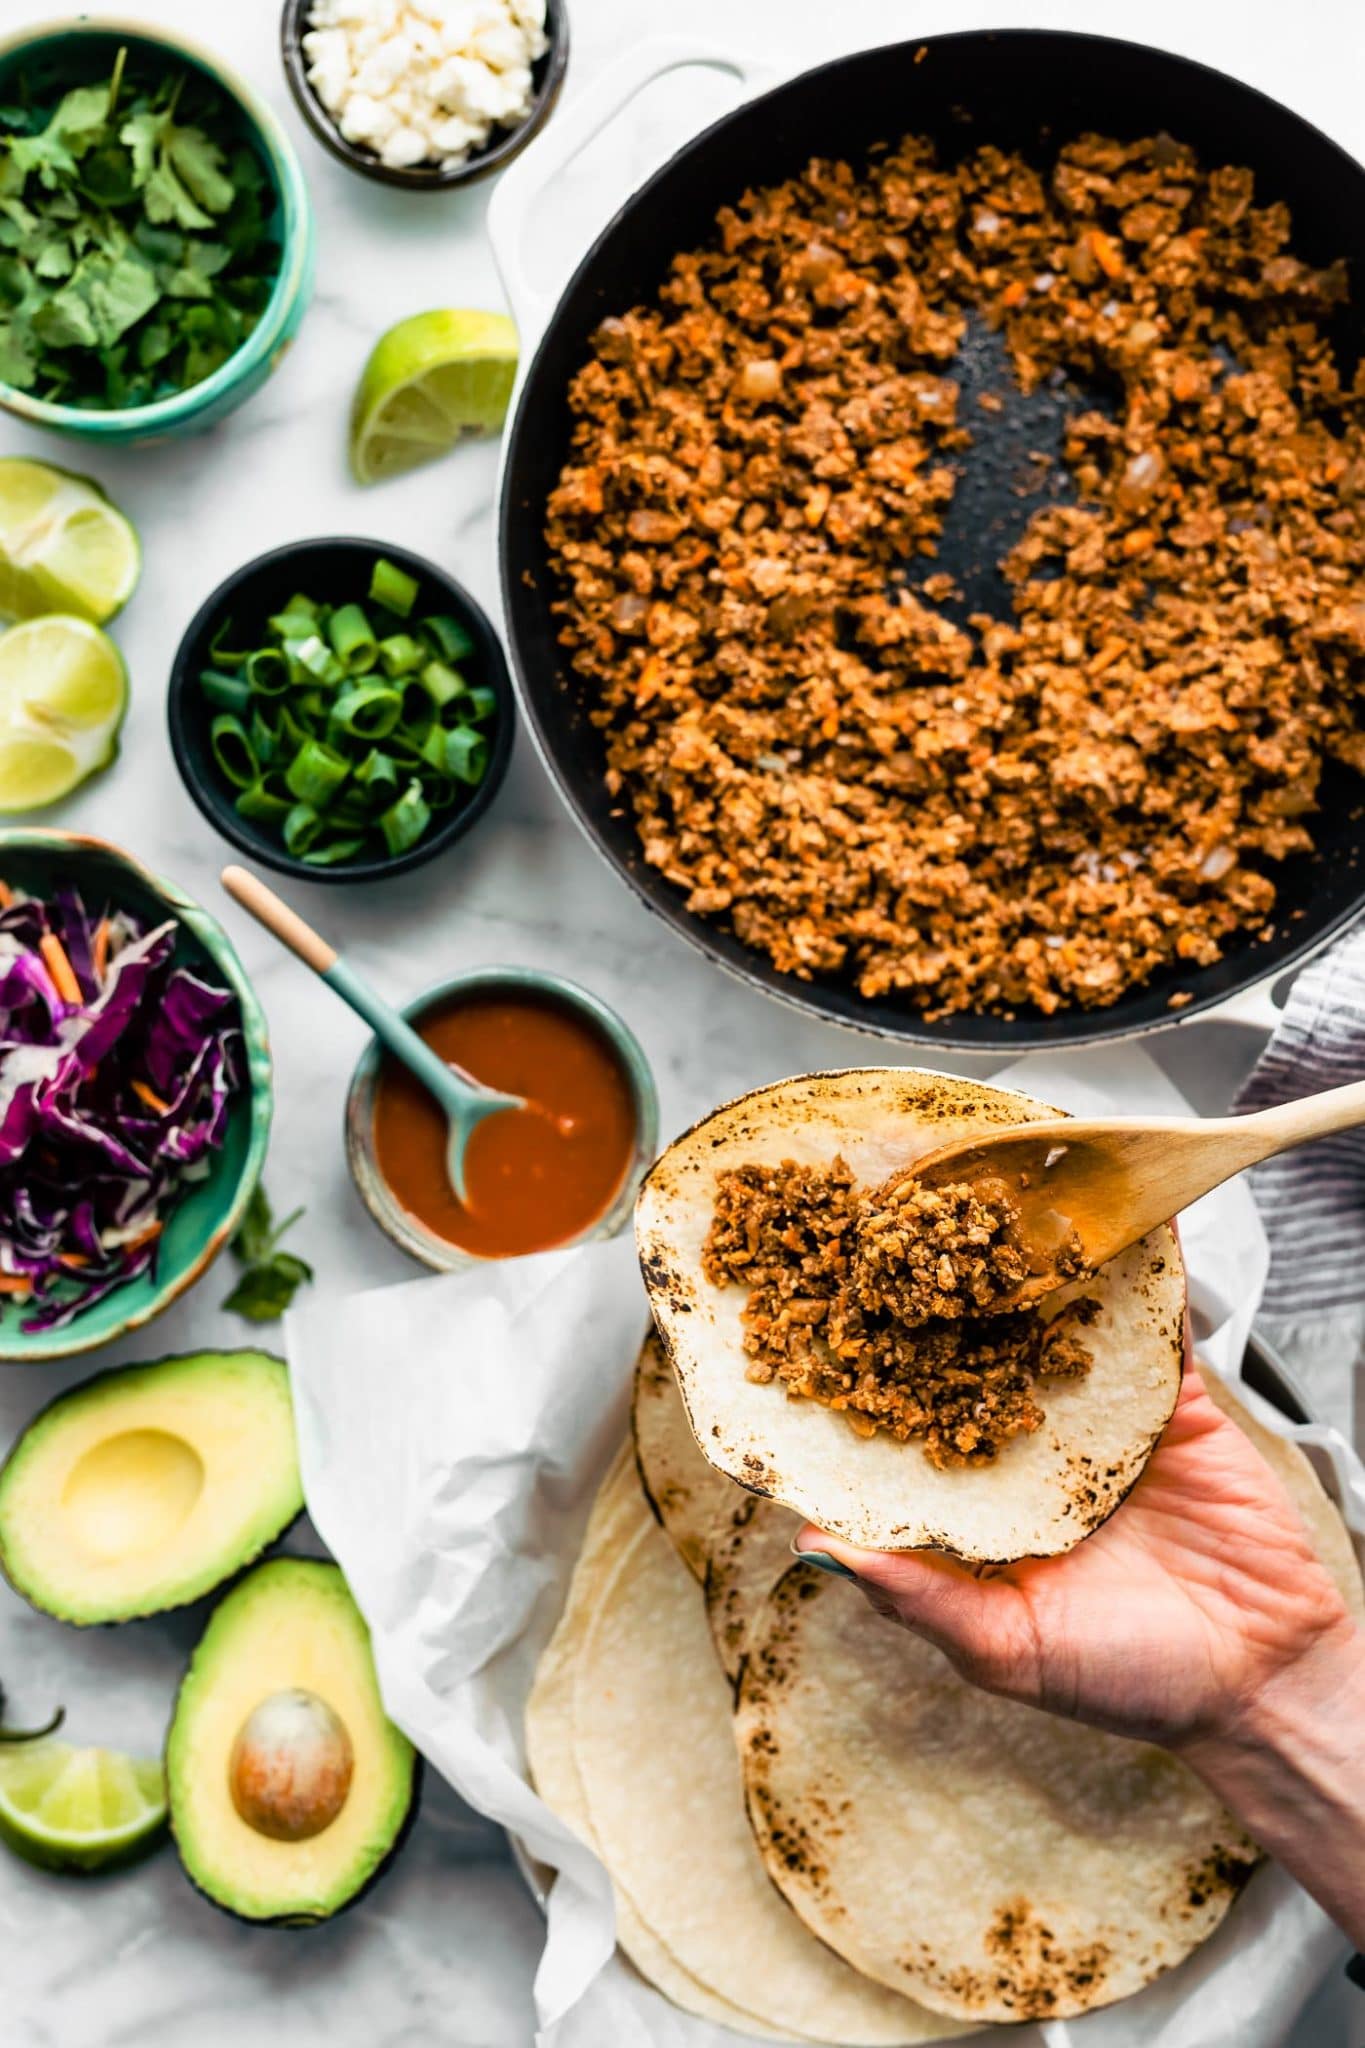 Overhead tabletop image of vegan tacos being prepared with vegan taco meat and fresh veggies.